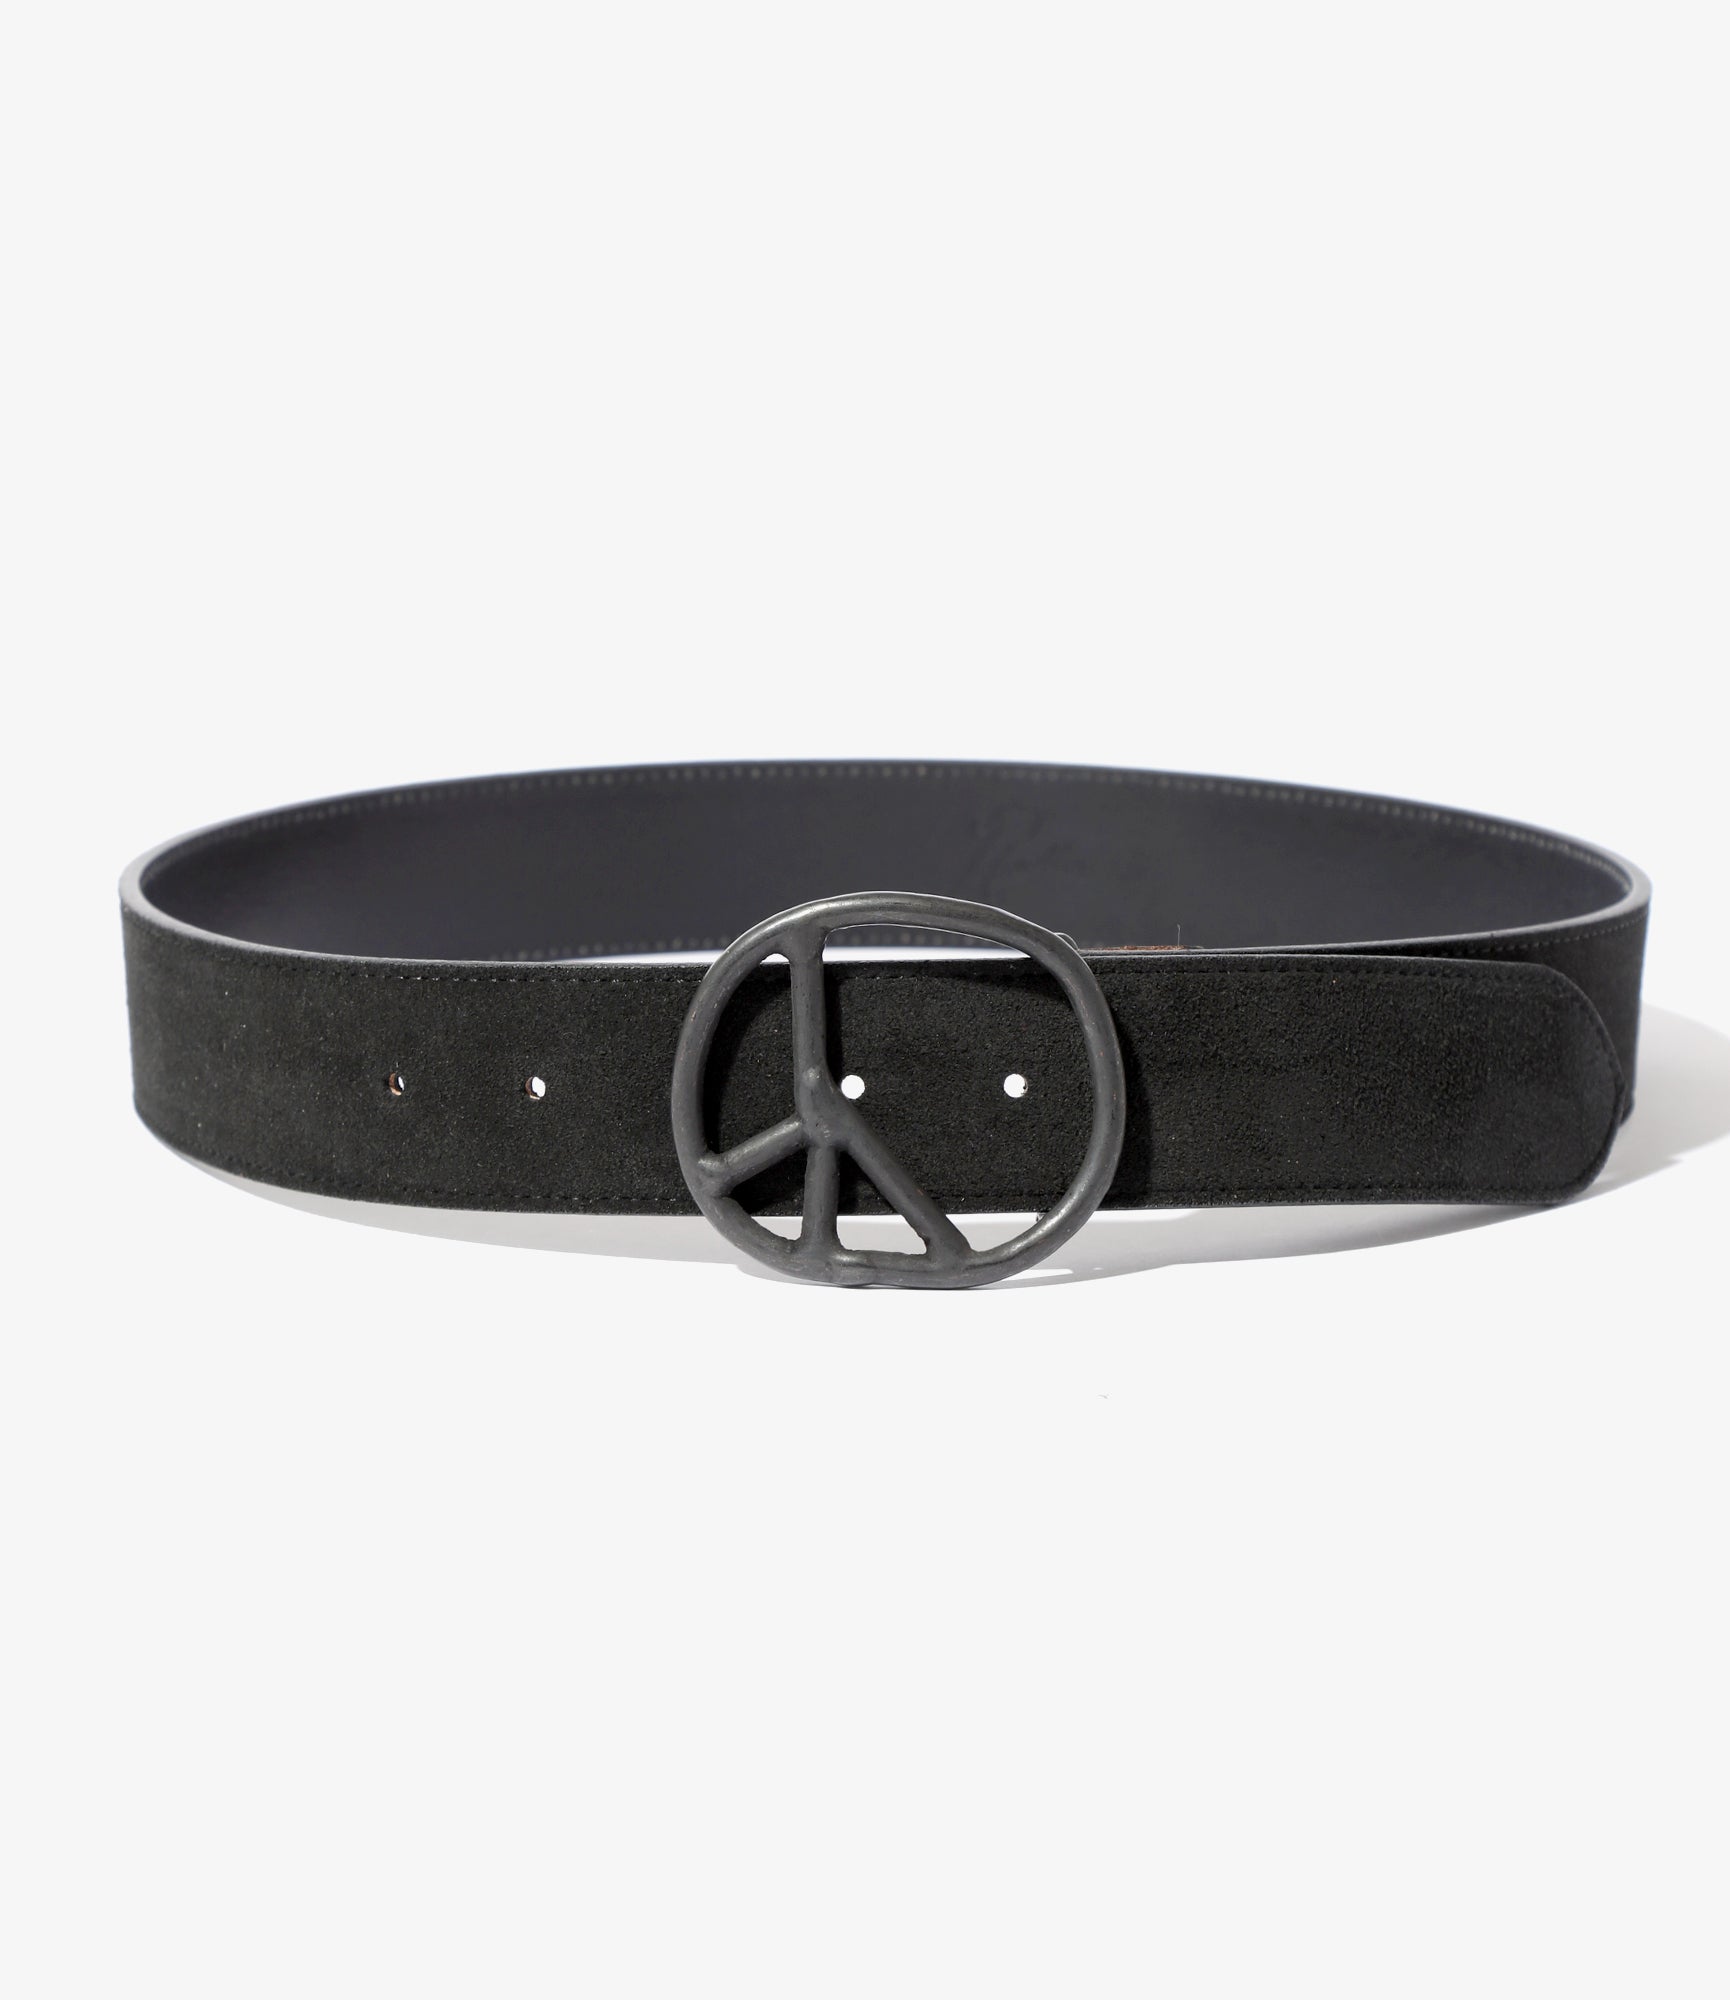 Needles Peace Buckle Belt - Suede Leather - Black